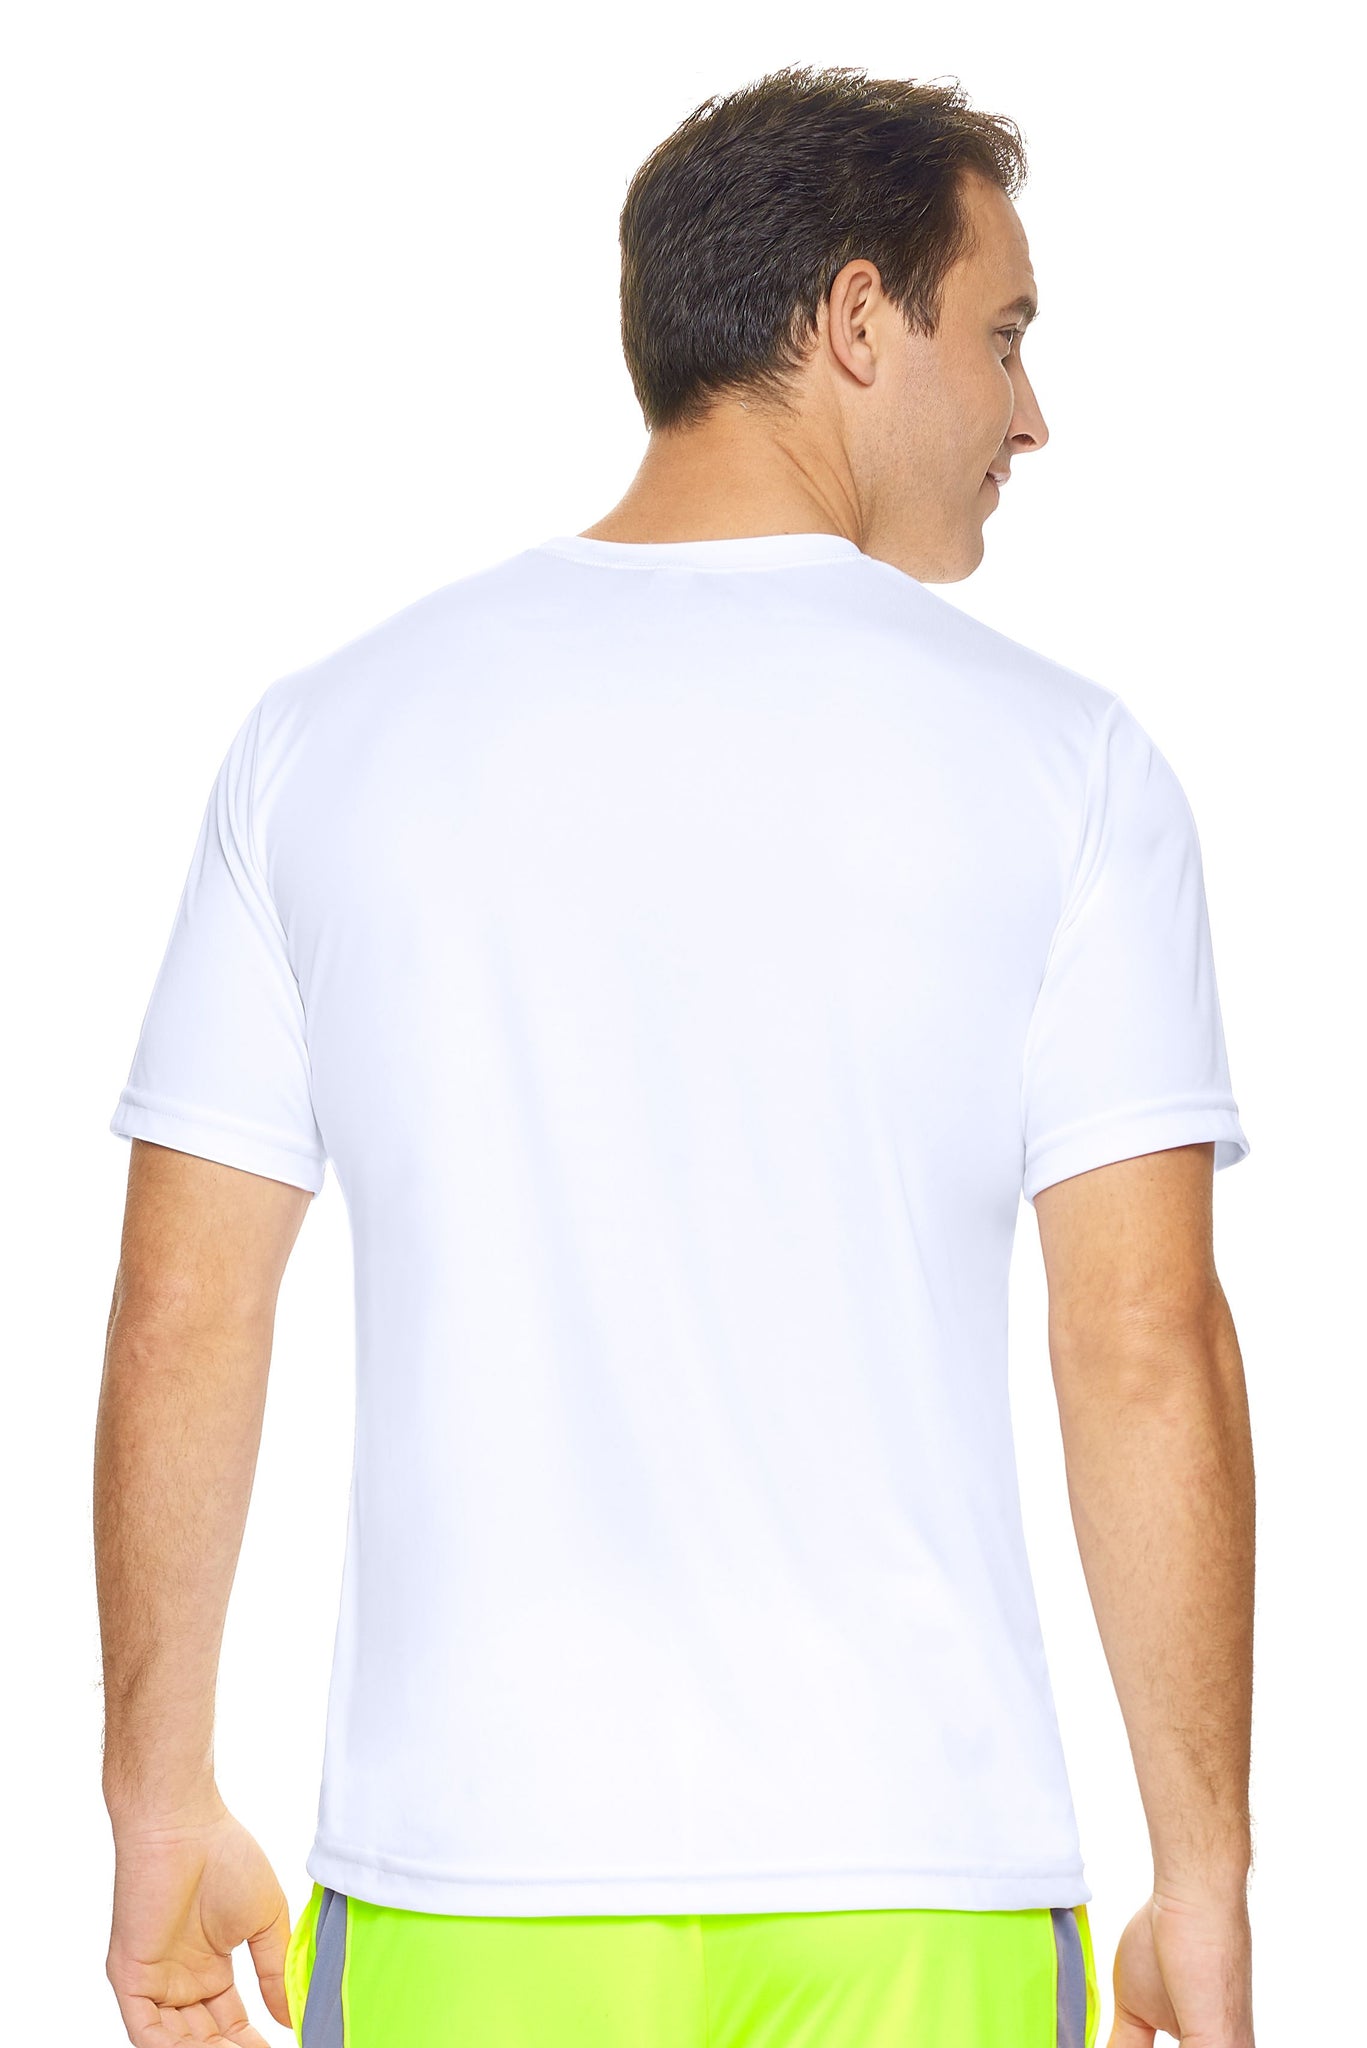 Expert Brand Wholesale pkmax Crewneck Expert Tee Activewear White 3#white